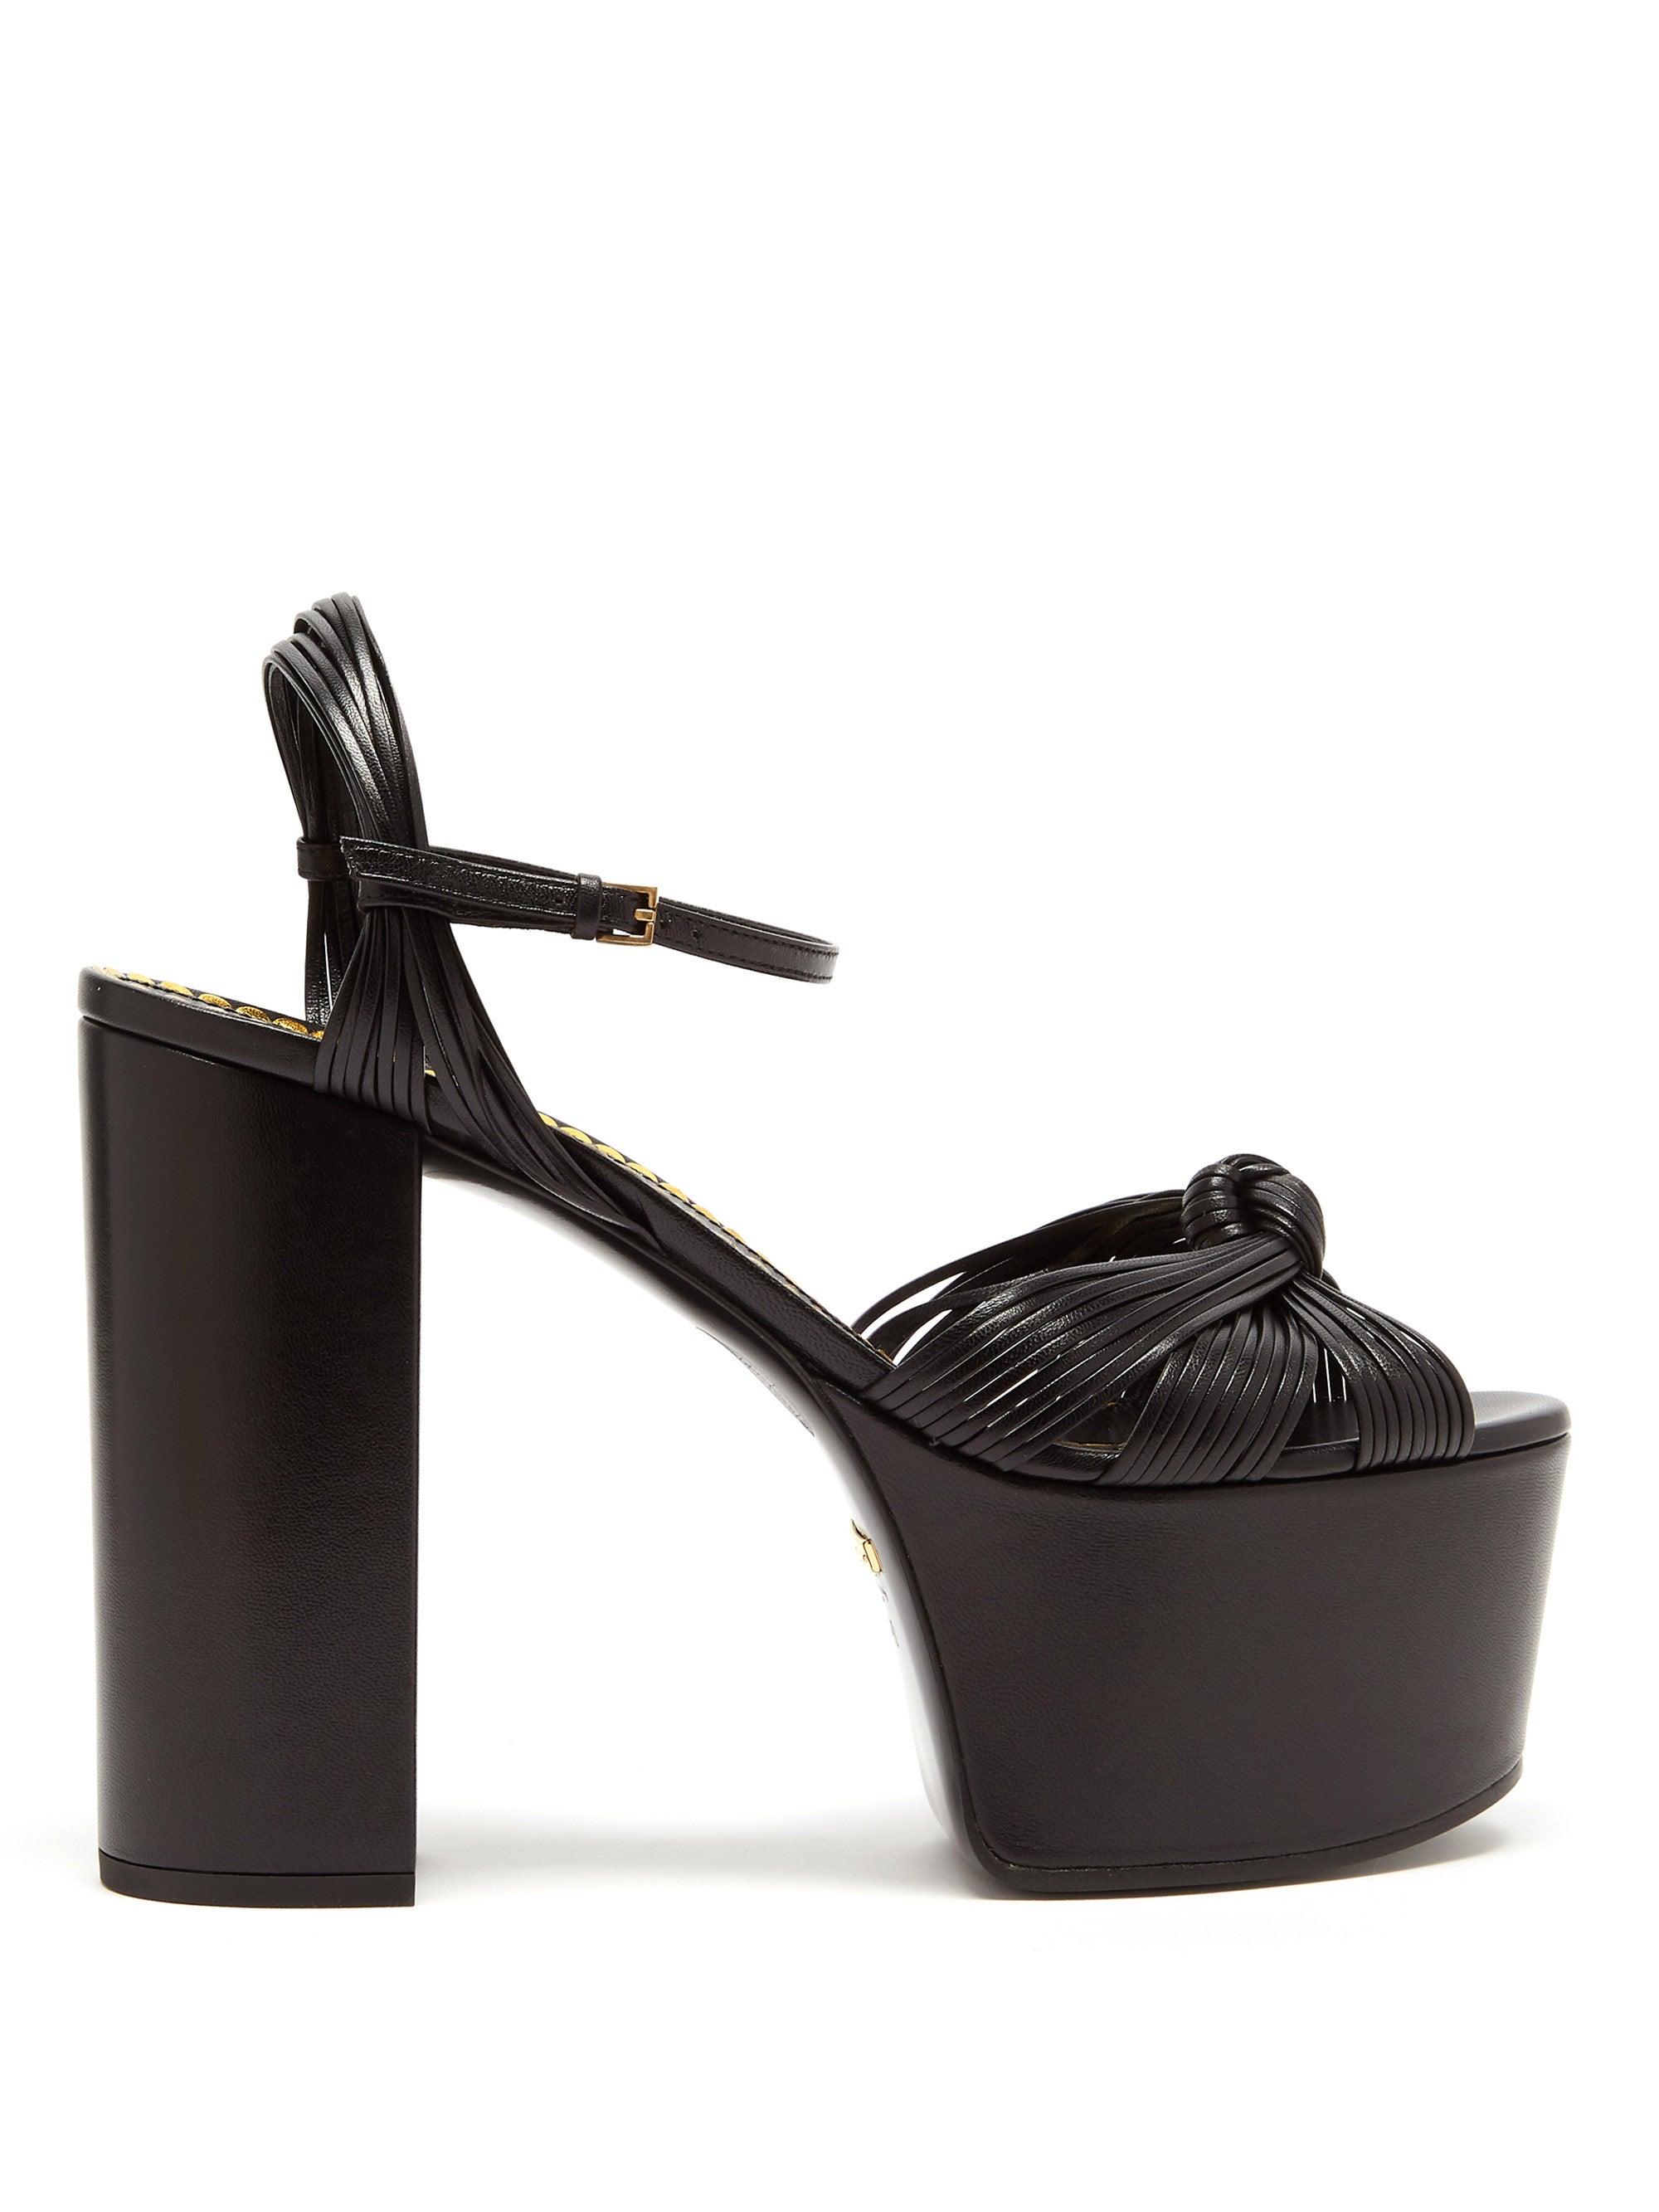 Gucci Leather Platform Sandal in Black | Lyst